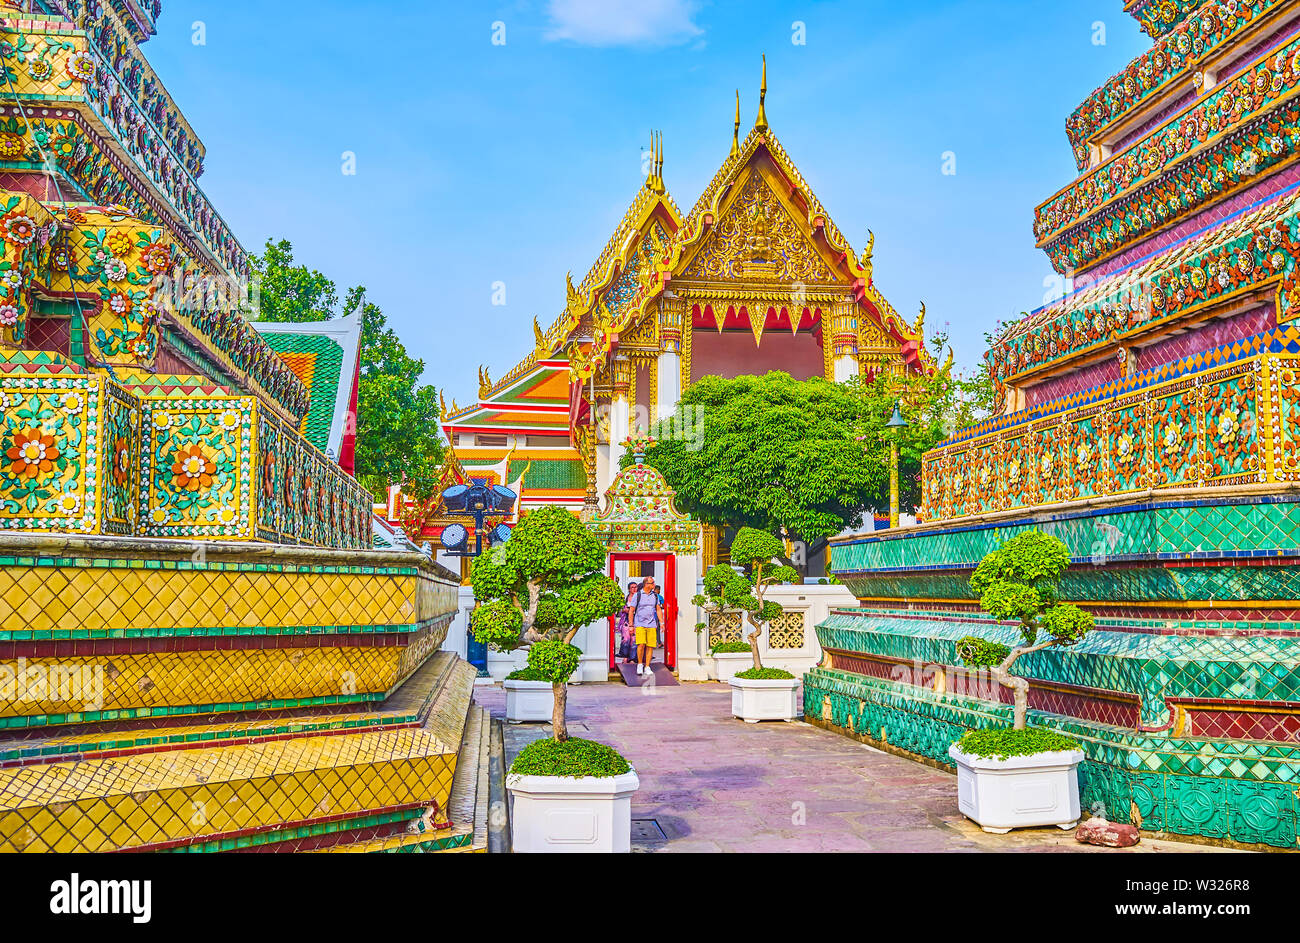 BANGKOK, THAILAND - 22 April, 2019: Das herrliche stupas von Phra Maha Chedi Schrein abgedeckt hcolorful wit Kacheln, am 22. April in Bangkok. Stockfoto